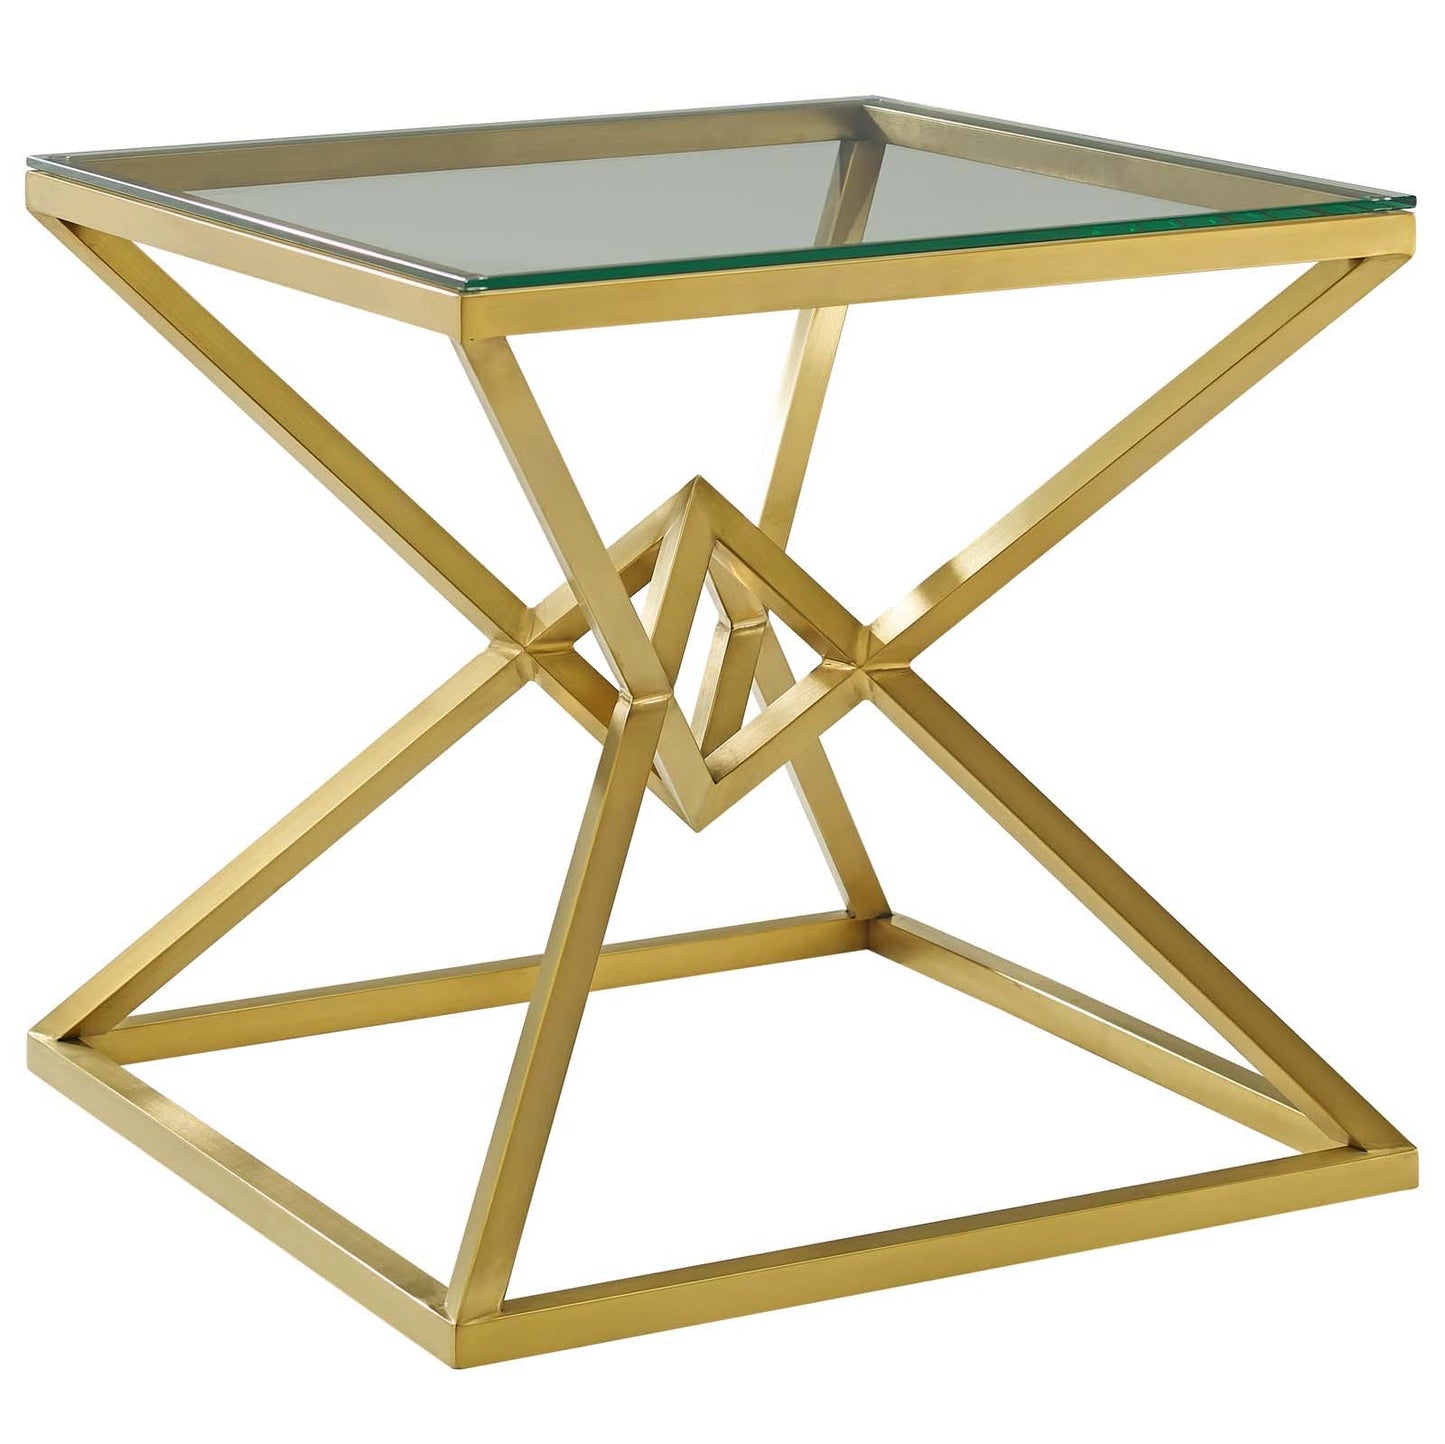 GOLD METAL DIAMOND FRAME GLASS TABLE TOP SIDE TABLE